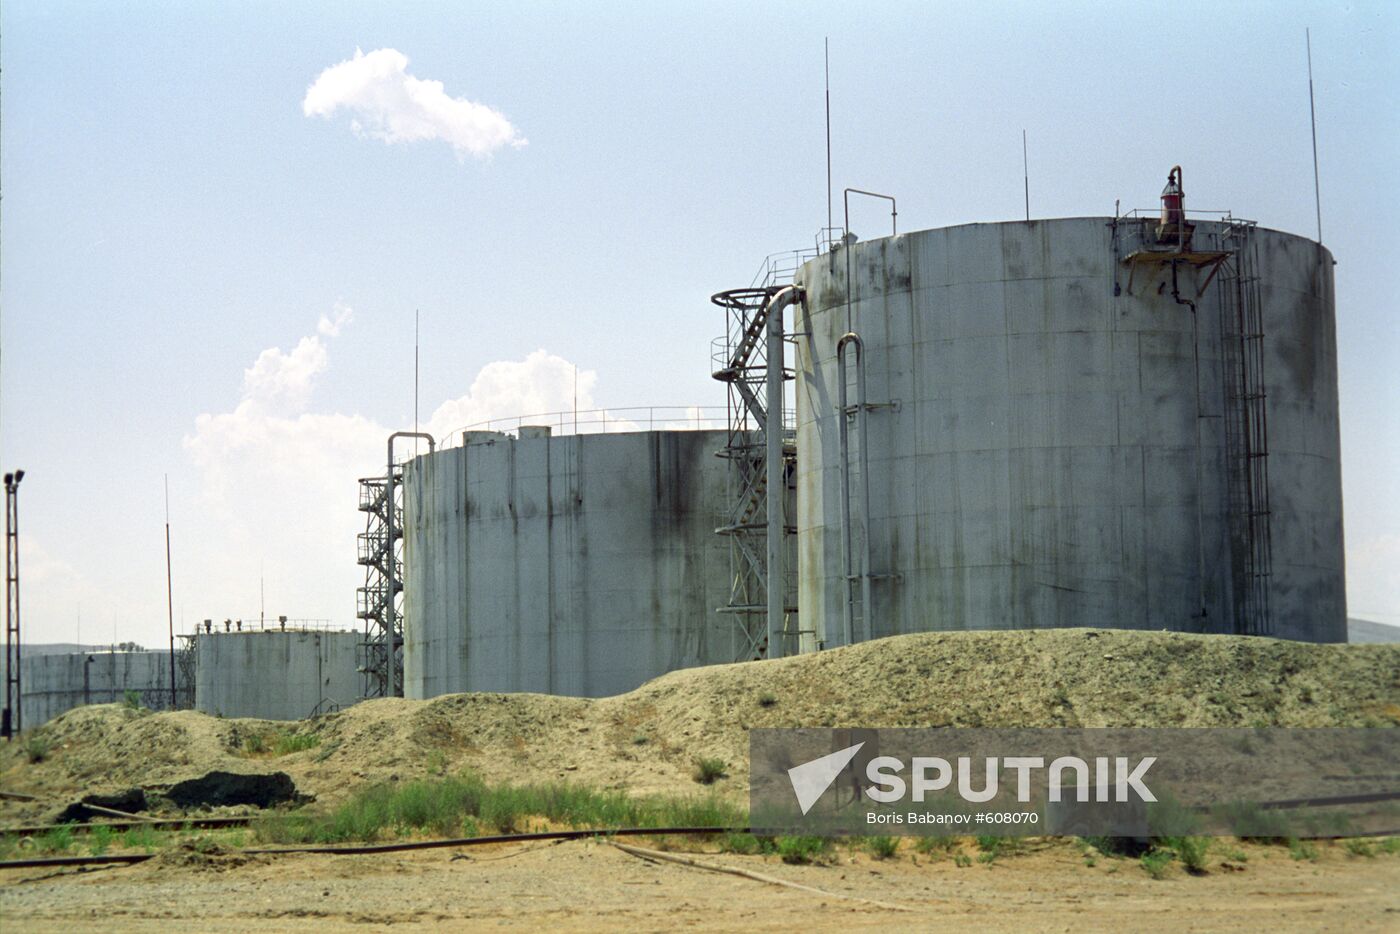 Oil storage tank